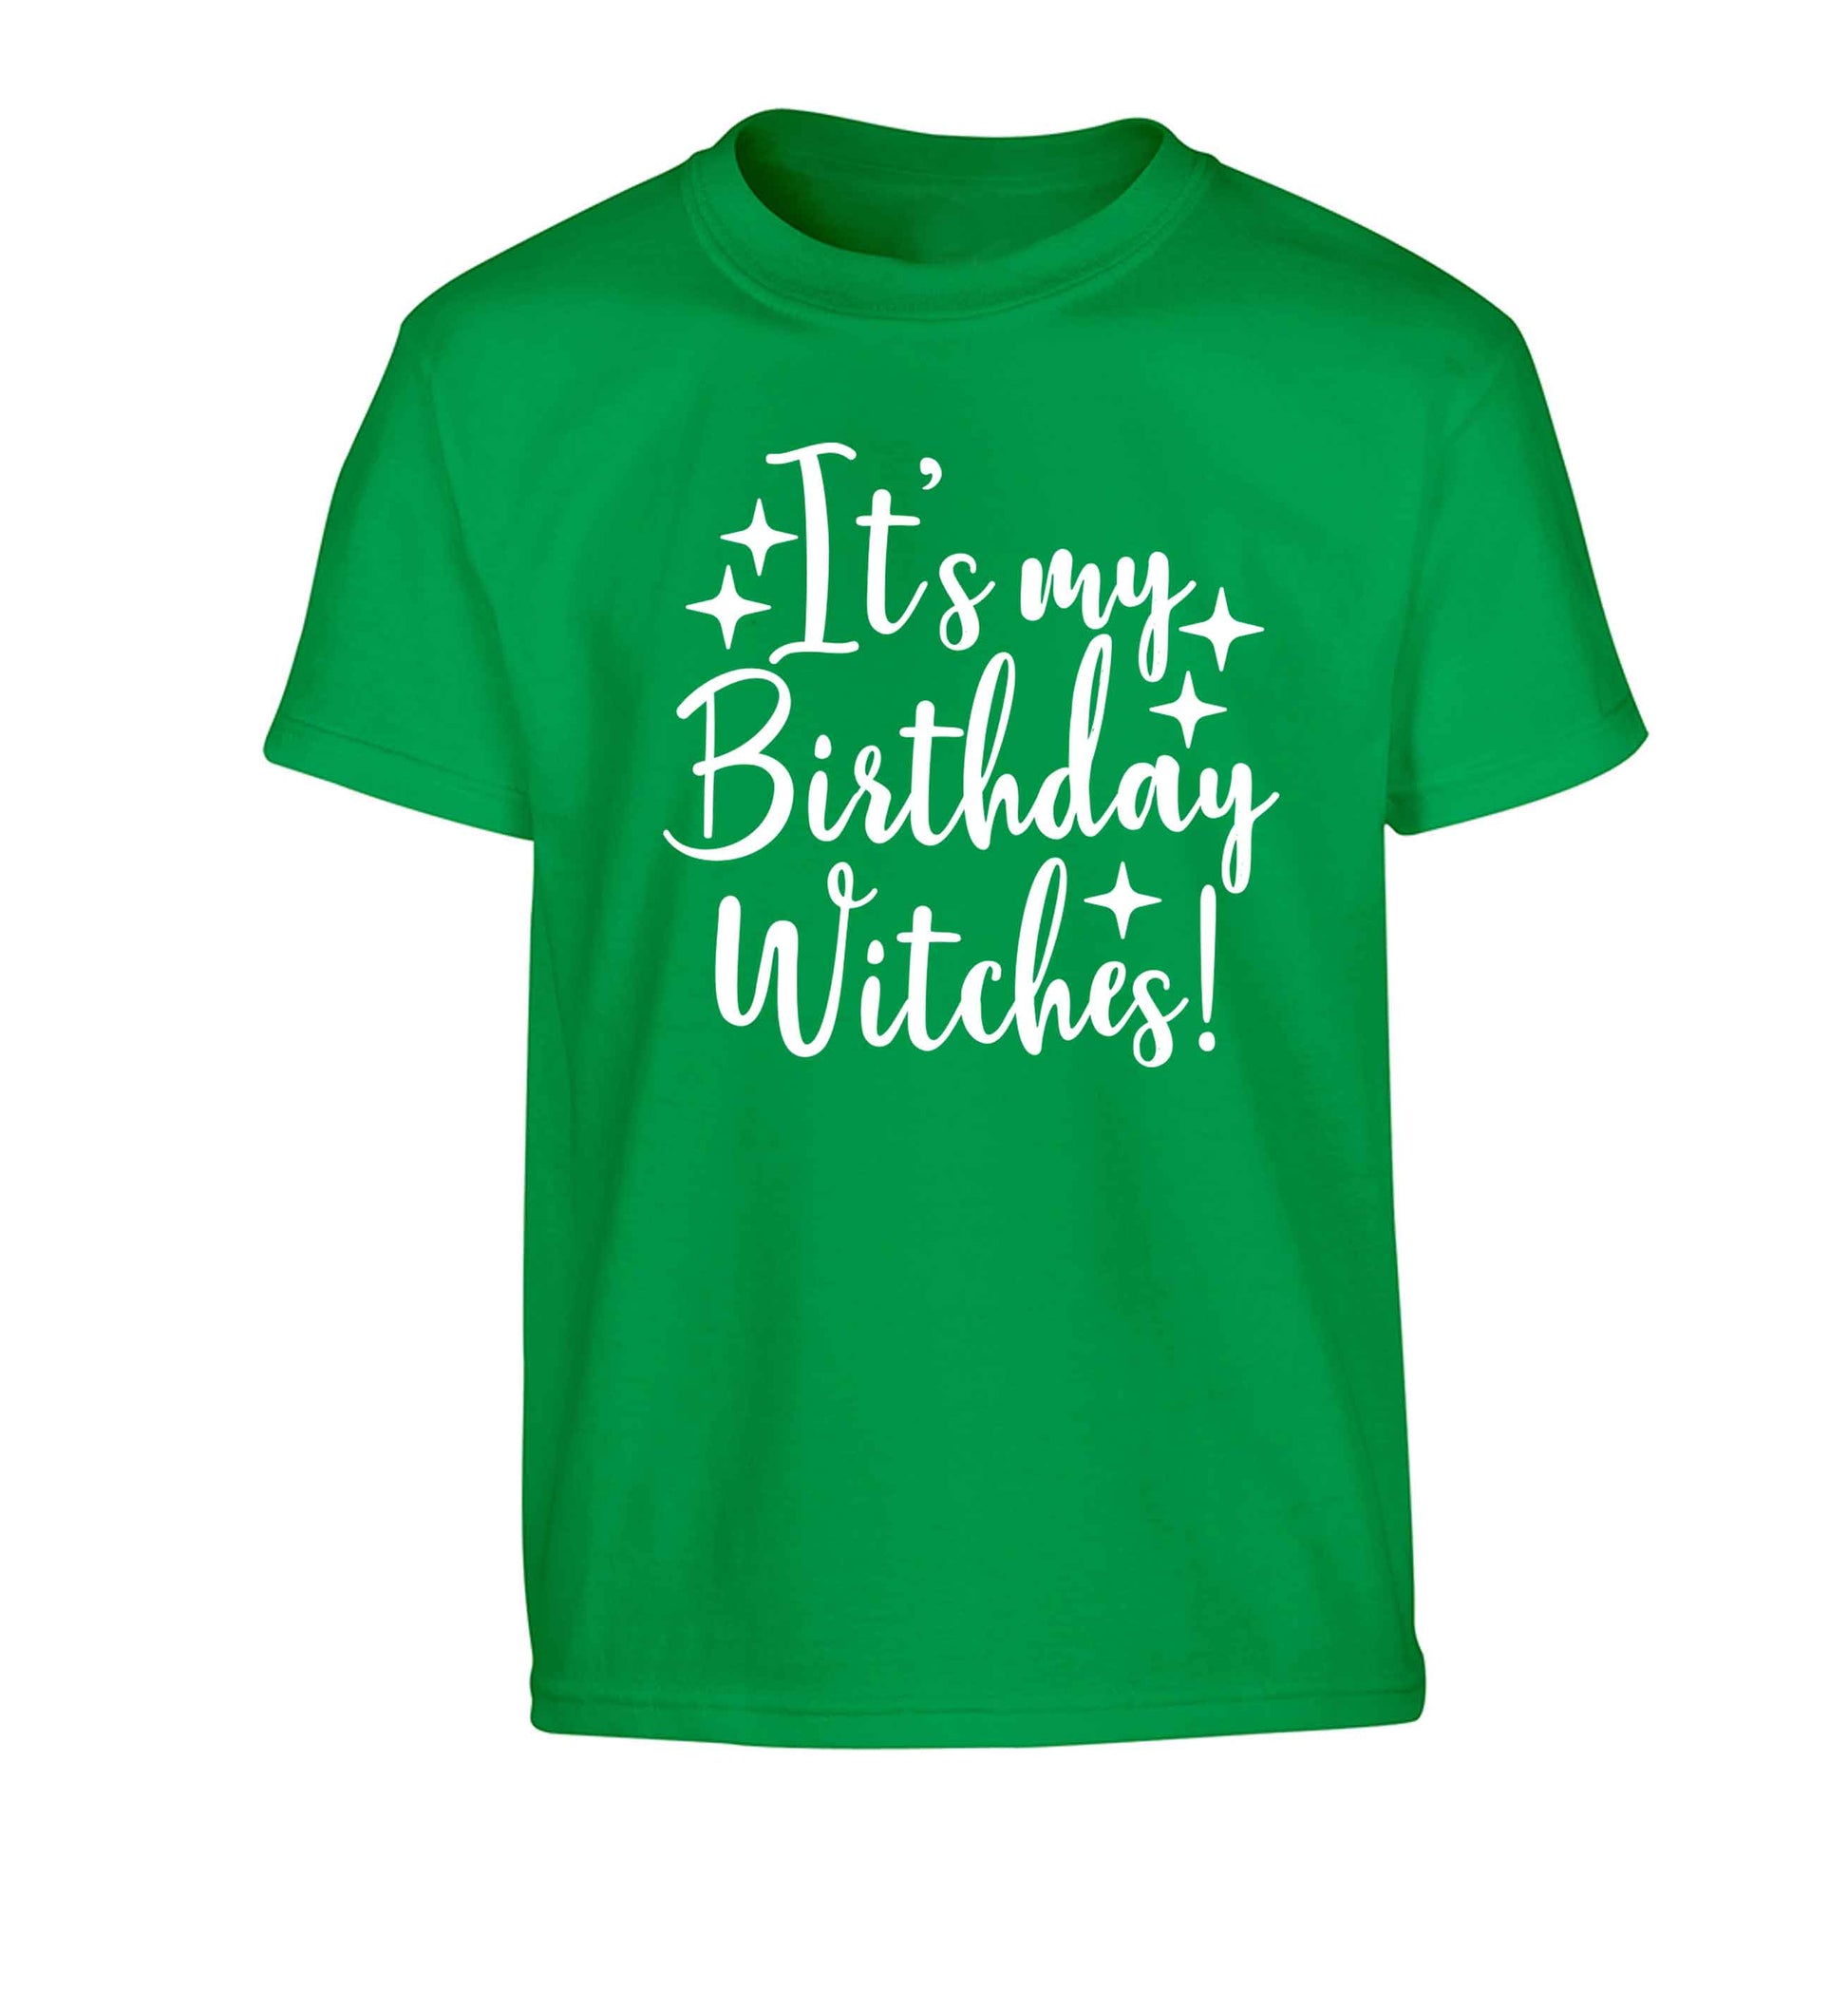 It's my birthday witches!Children's green Tshirt 12-13 Years